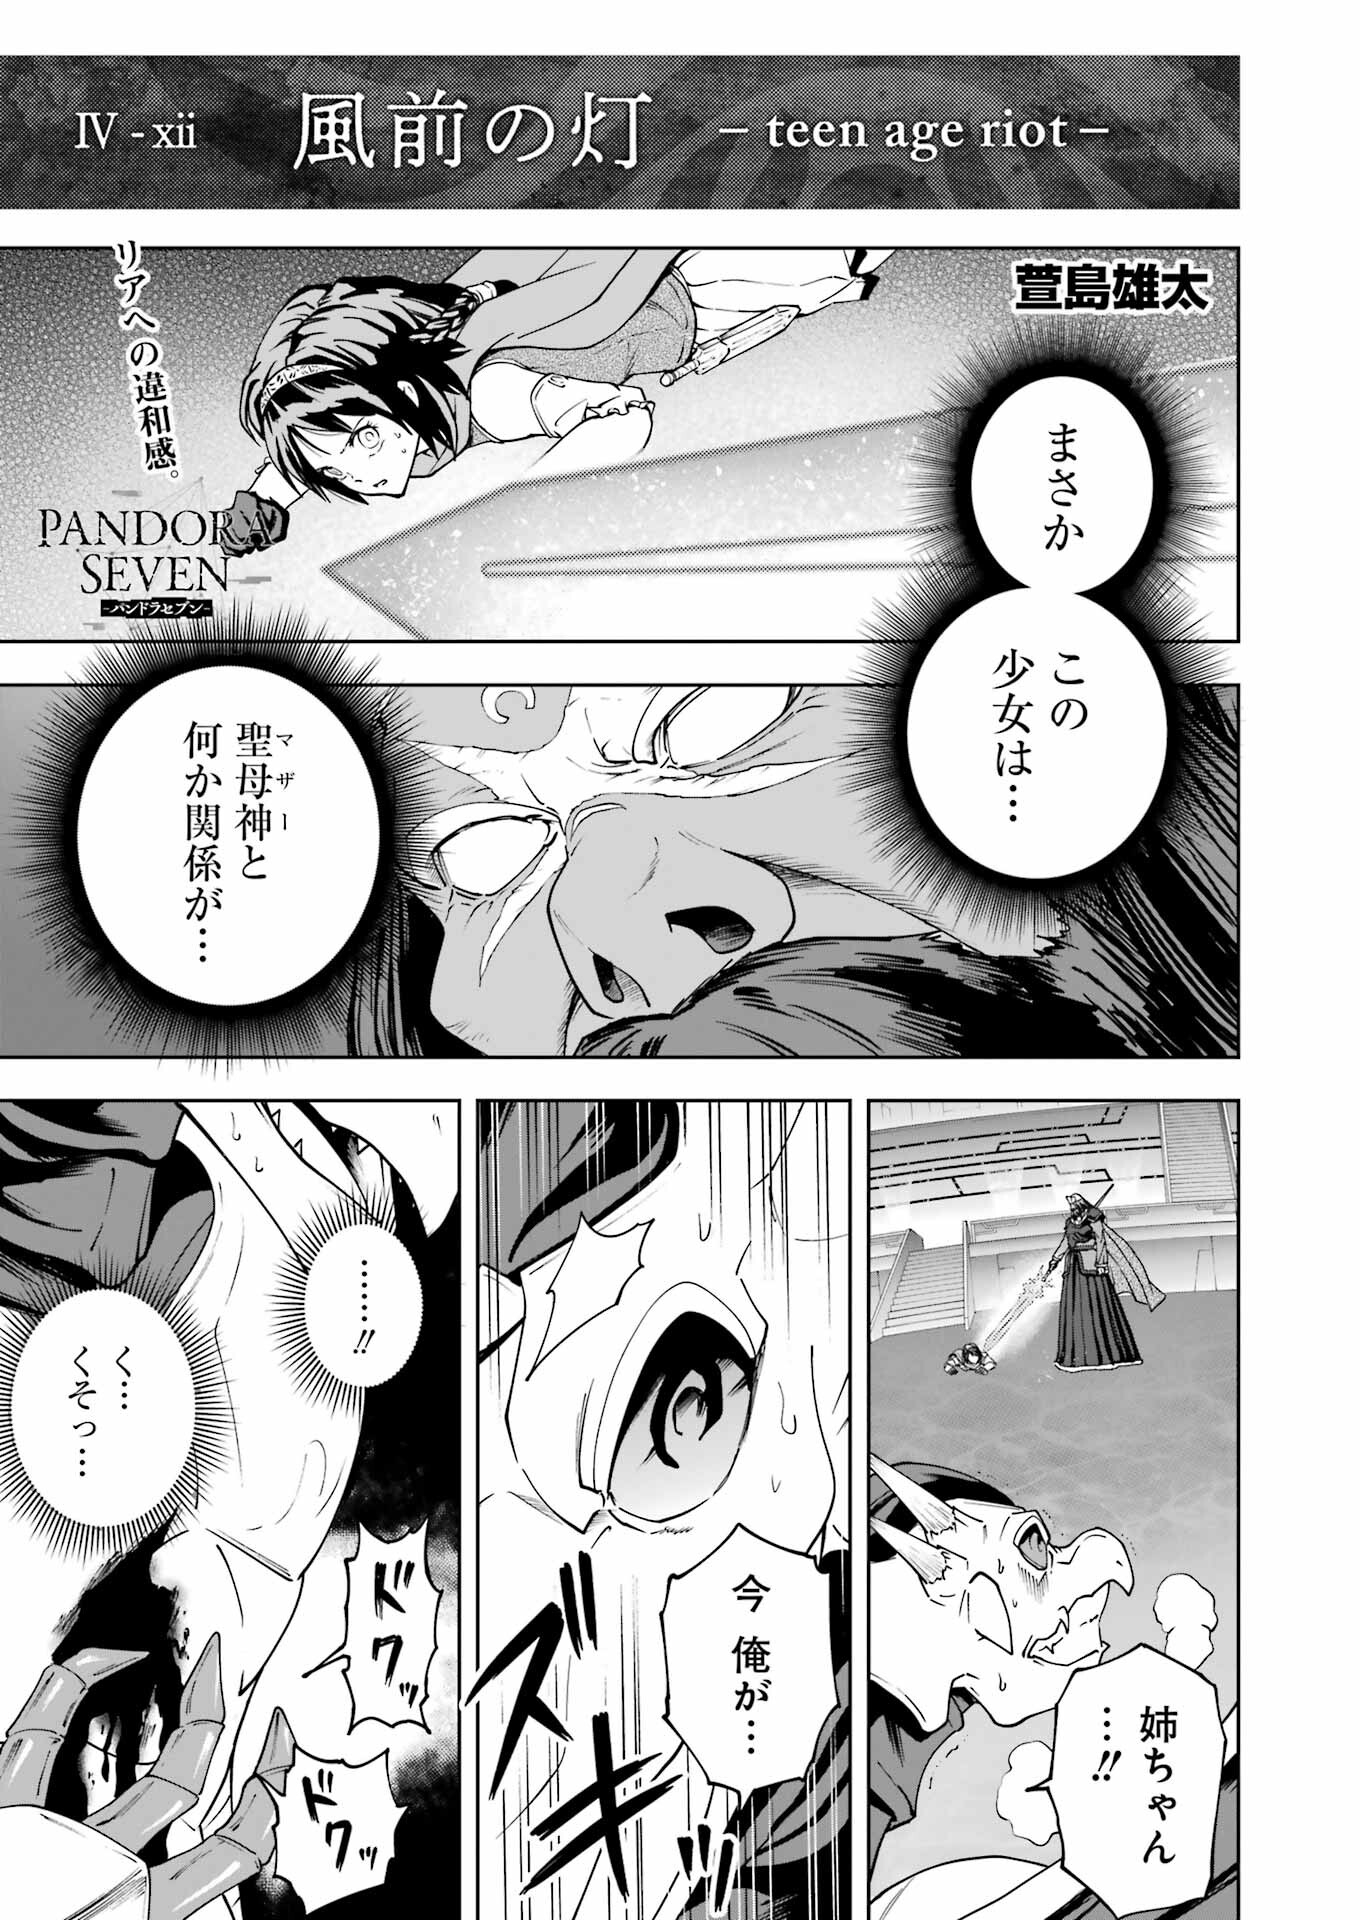 Pandora Seven - Chapter 45 - Page 1